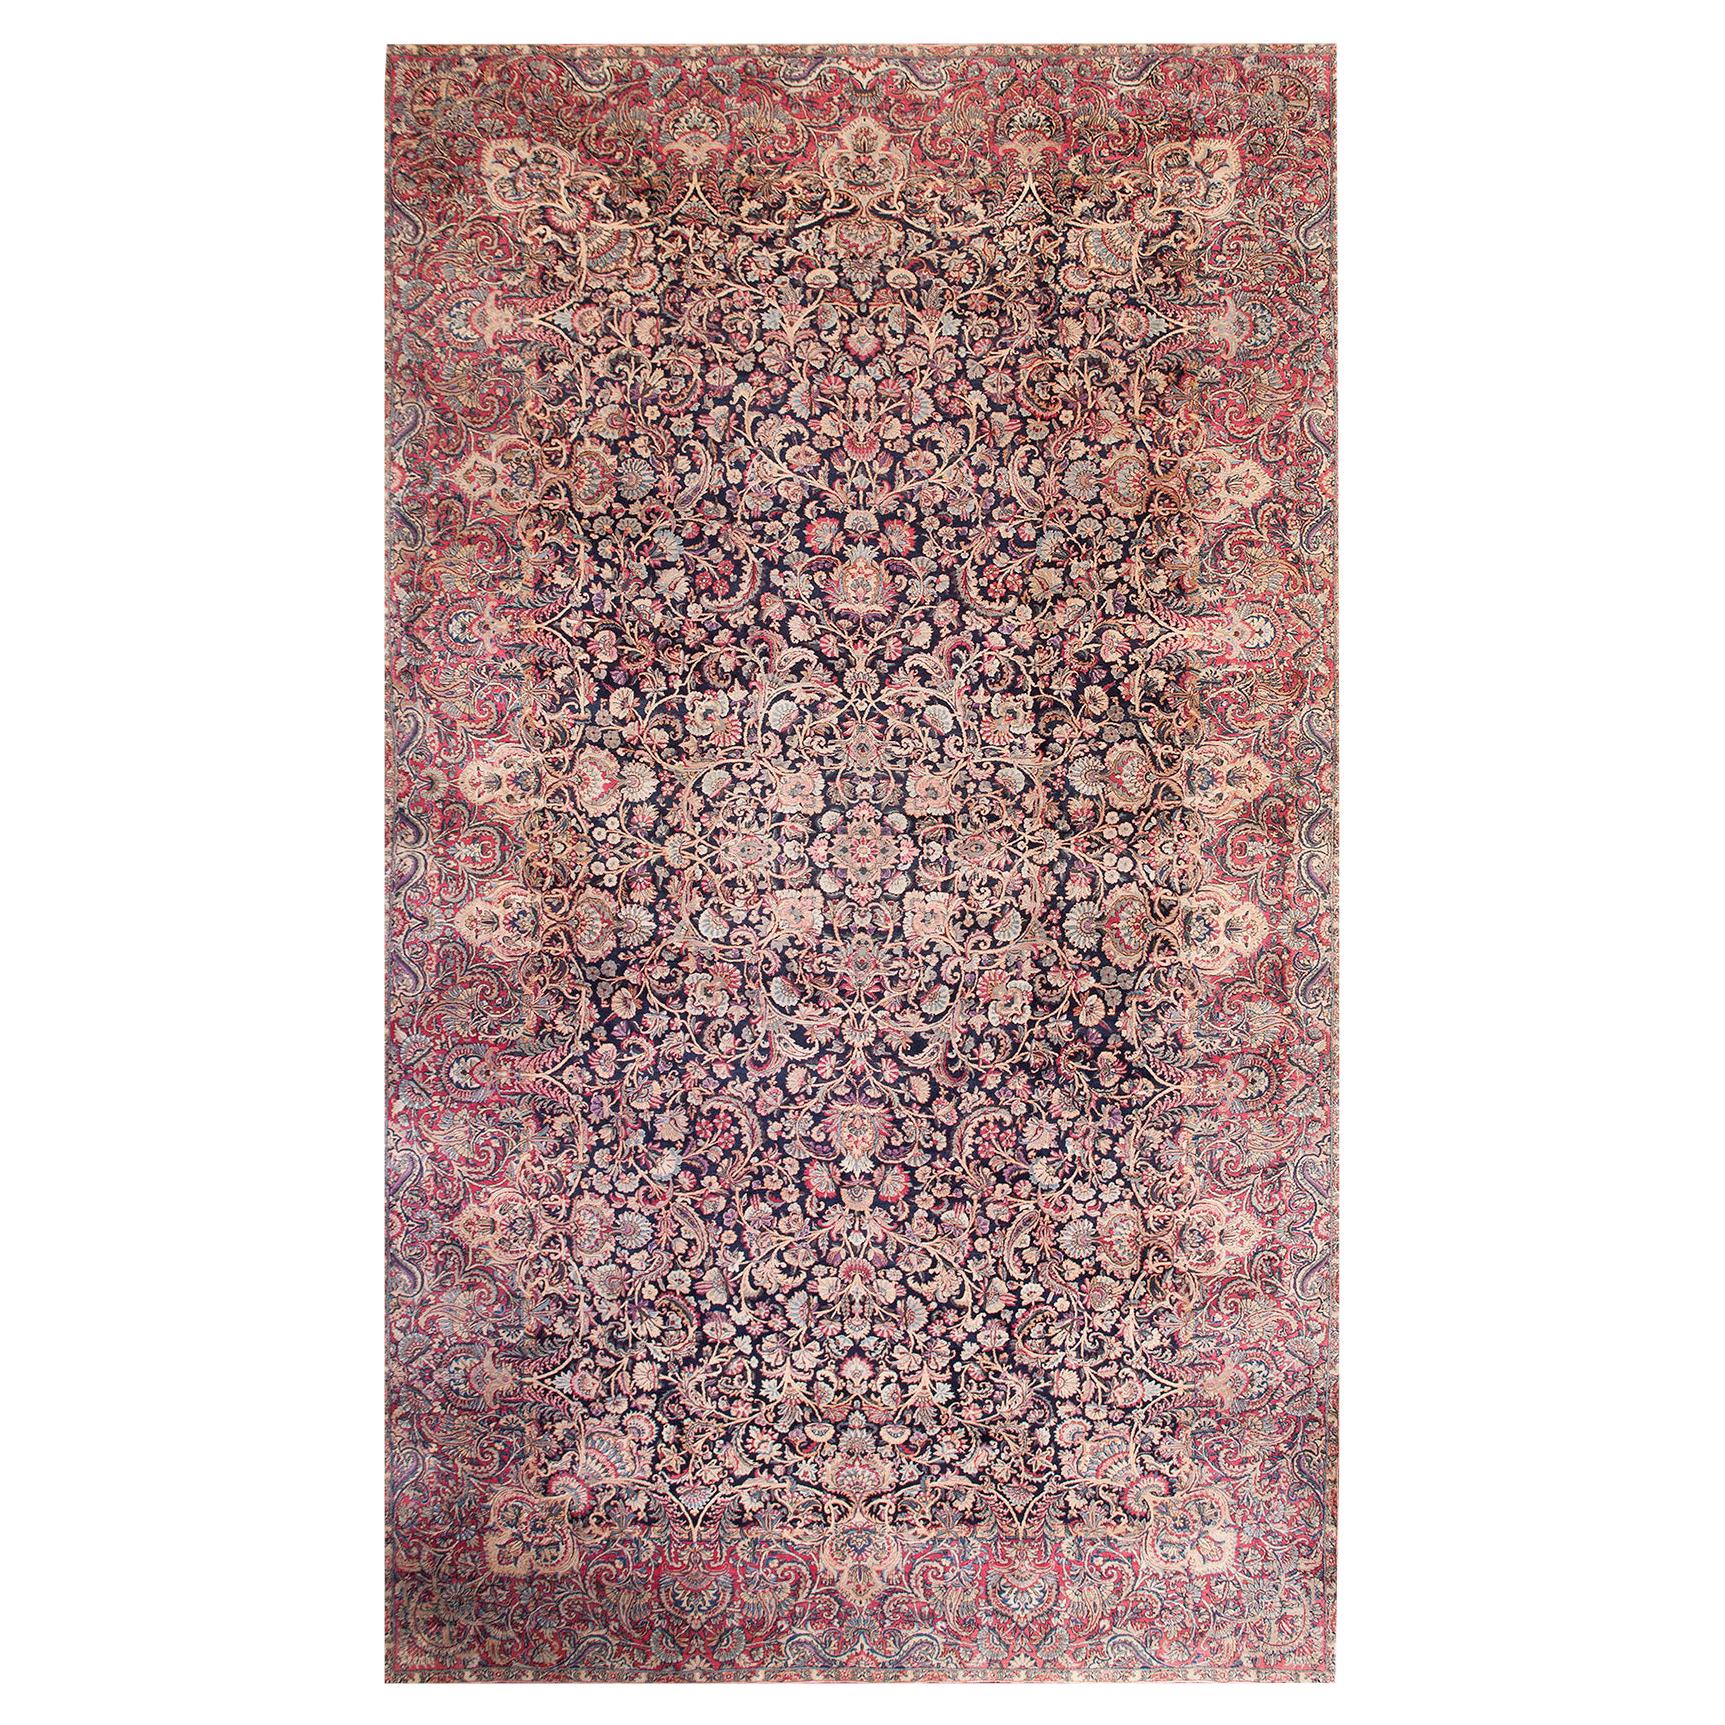 Early 20th Century S.E. Persian Kirman Carpet ( 9'10" x 17'8" - 300 x 538 )